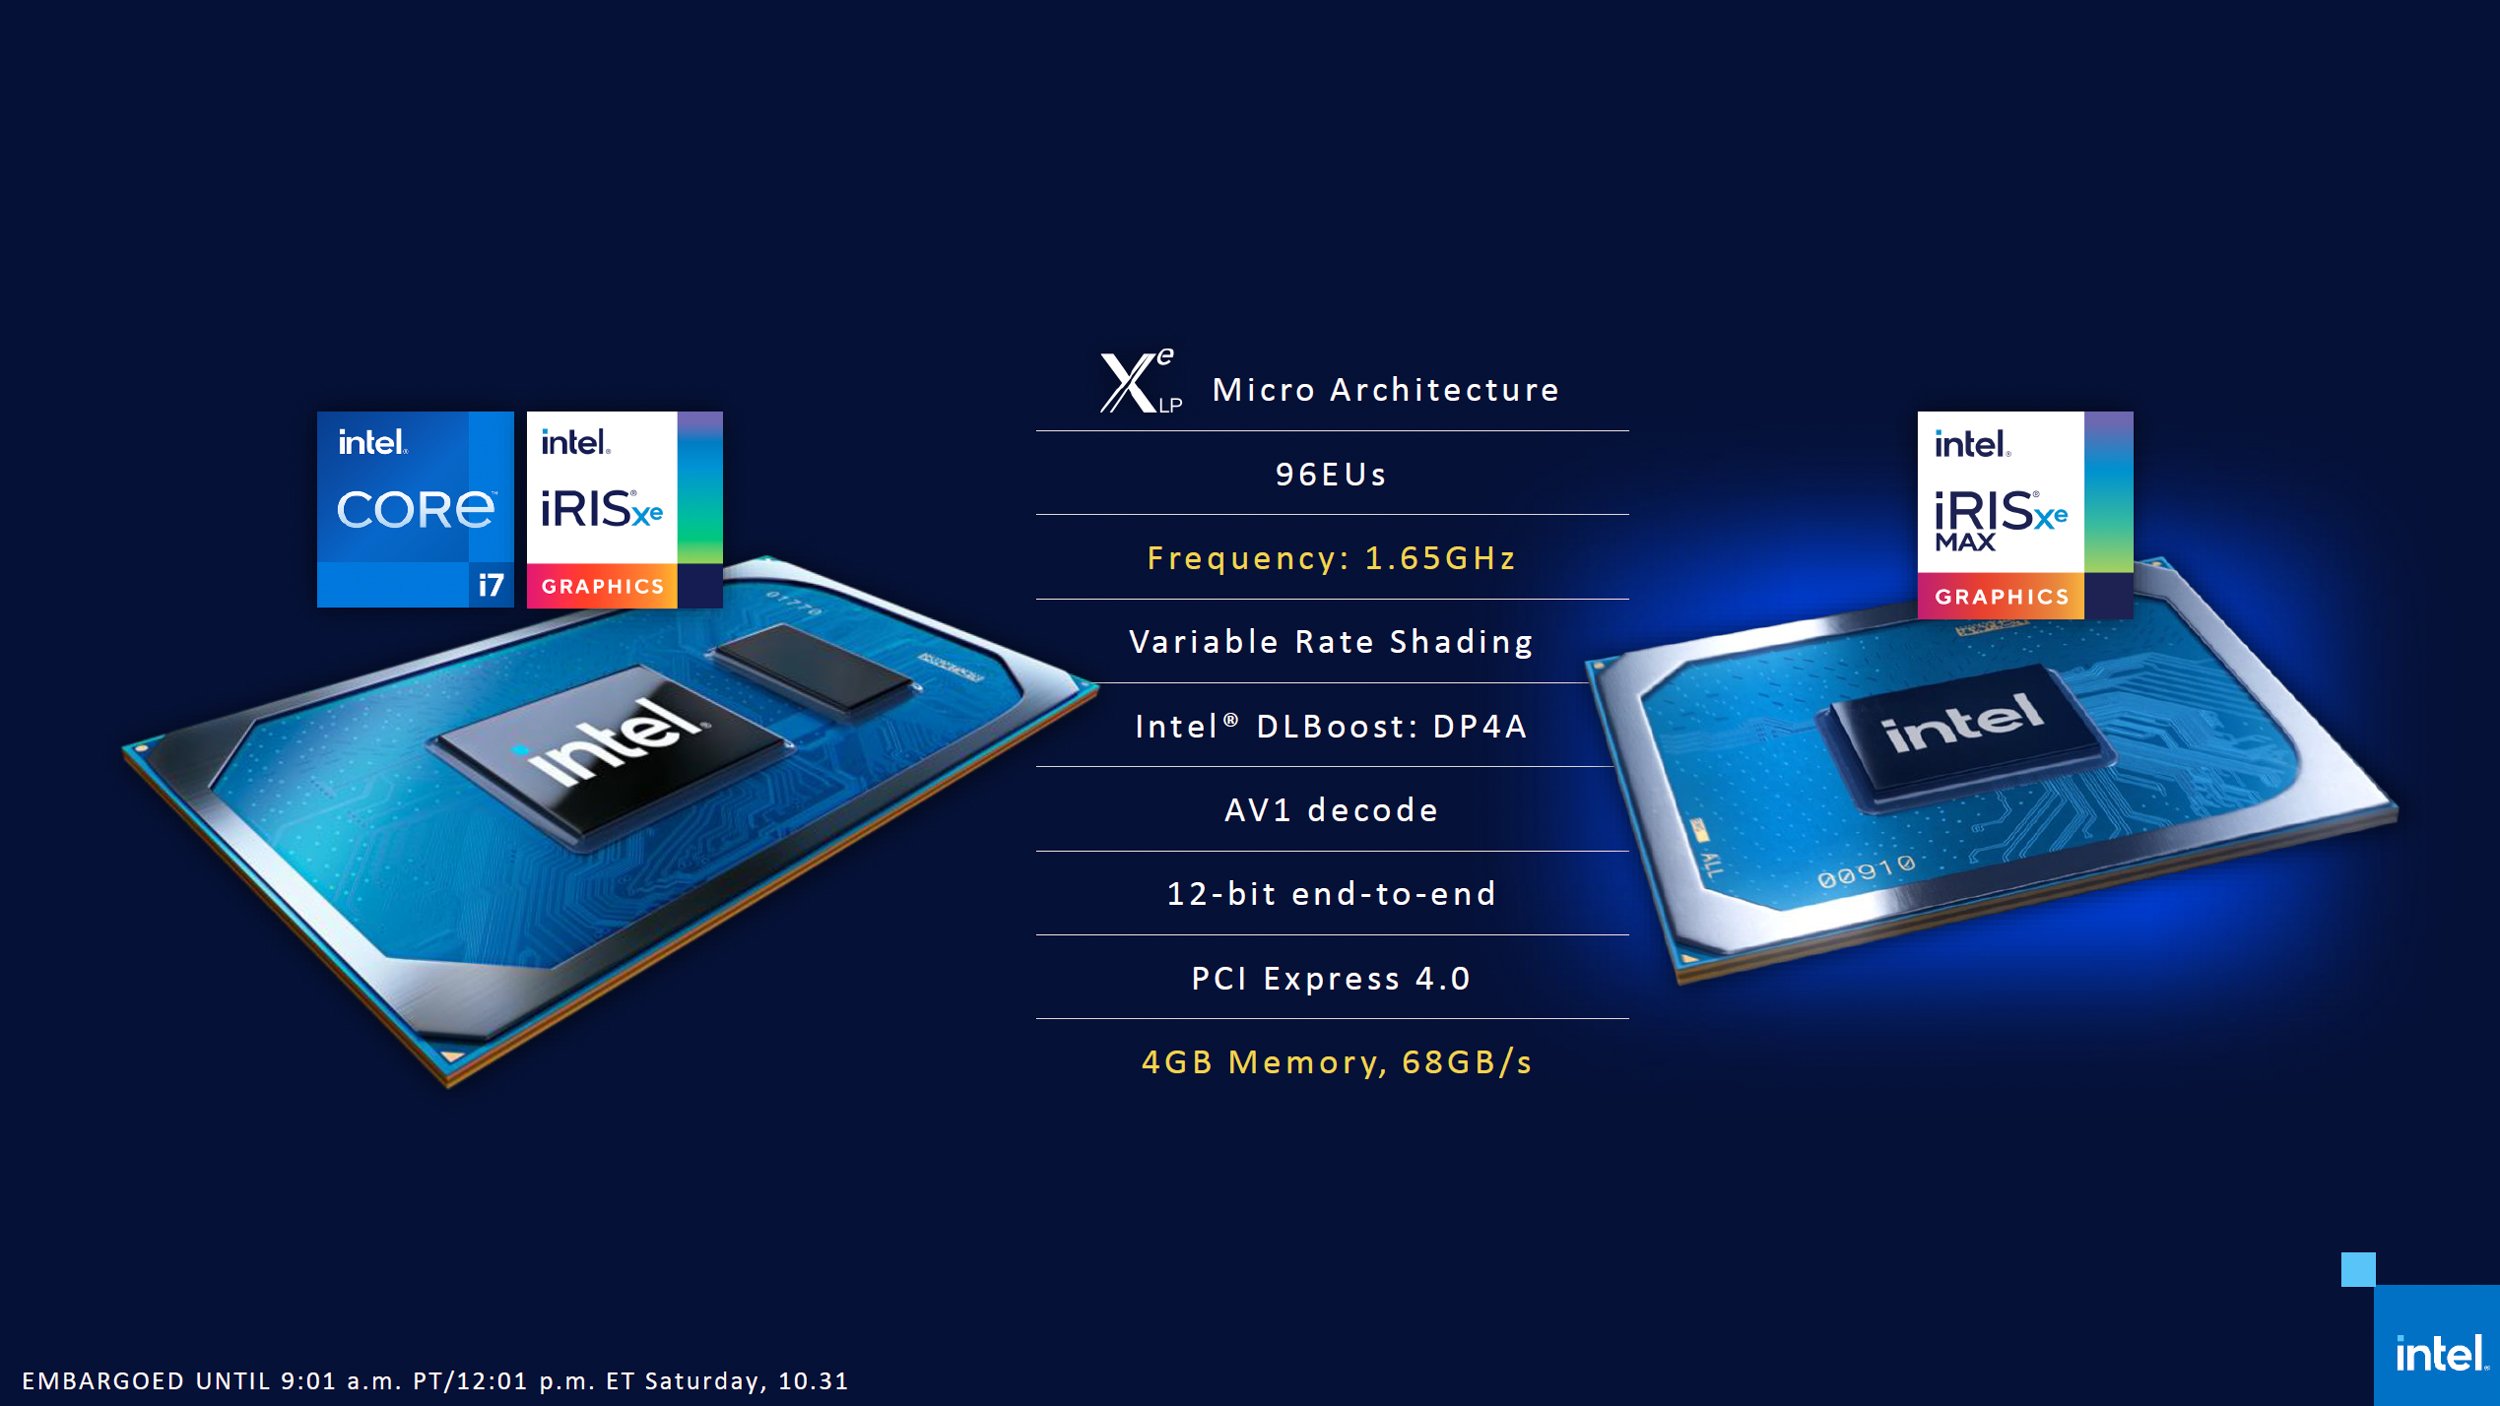 Intel mobile graphic. Видеокарта Intel Iris Graphics. Видеокарта Intel Iris xe. Intel Iris xe Graphics видеокарта. Intel Iris xe Graphics характеристики видеокарты.